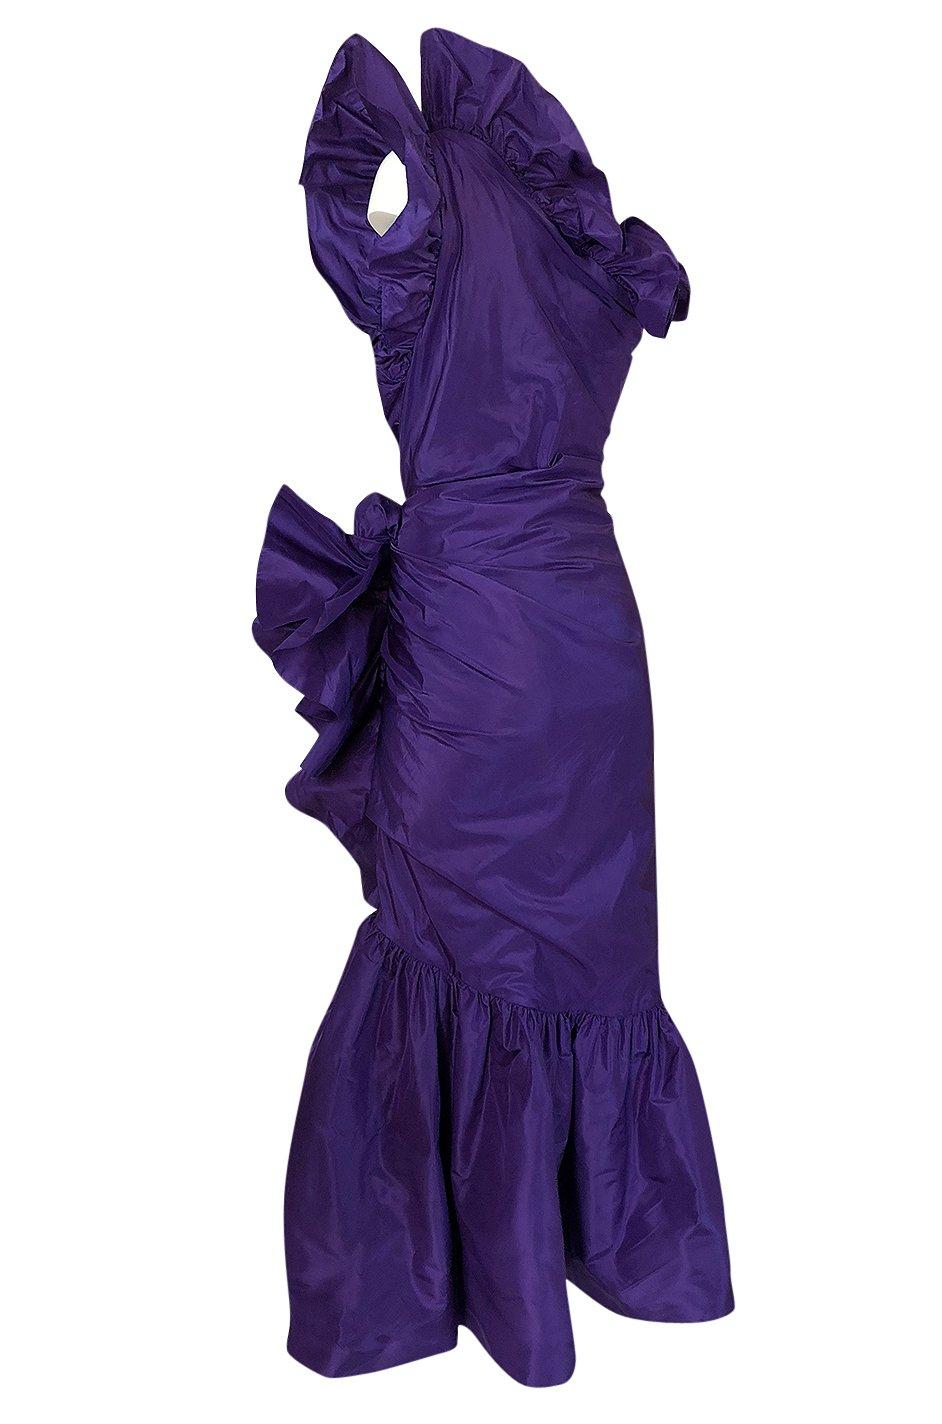 Women's Spring 1982 Unlabeled Givenchy One Shoulder Purple Silk Dress